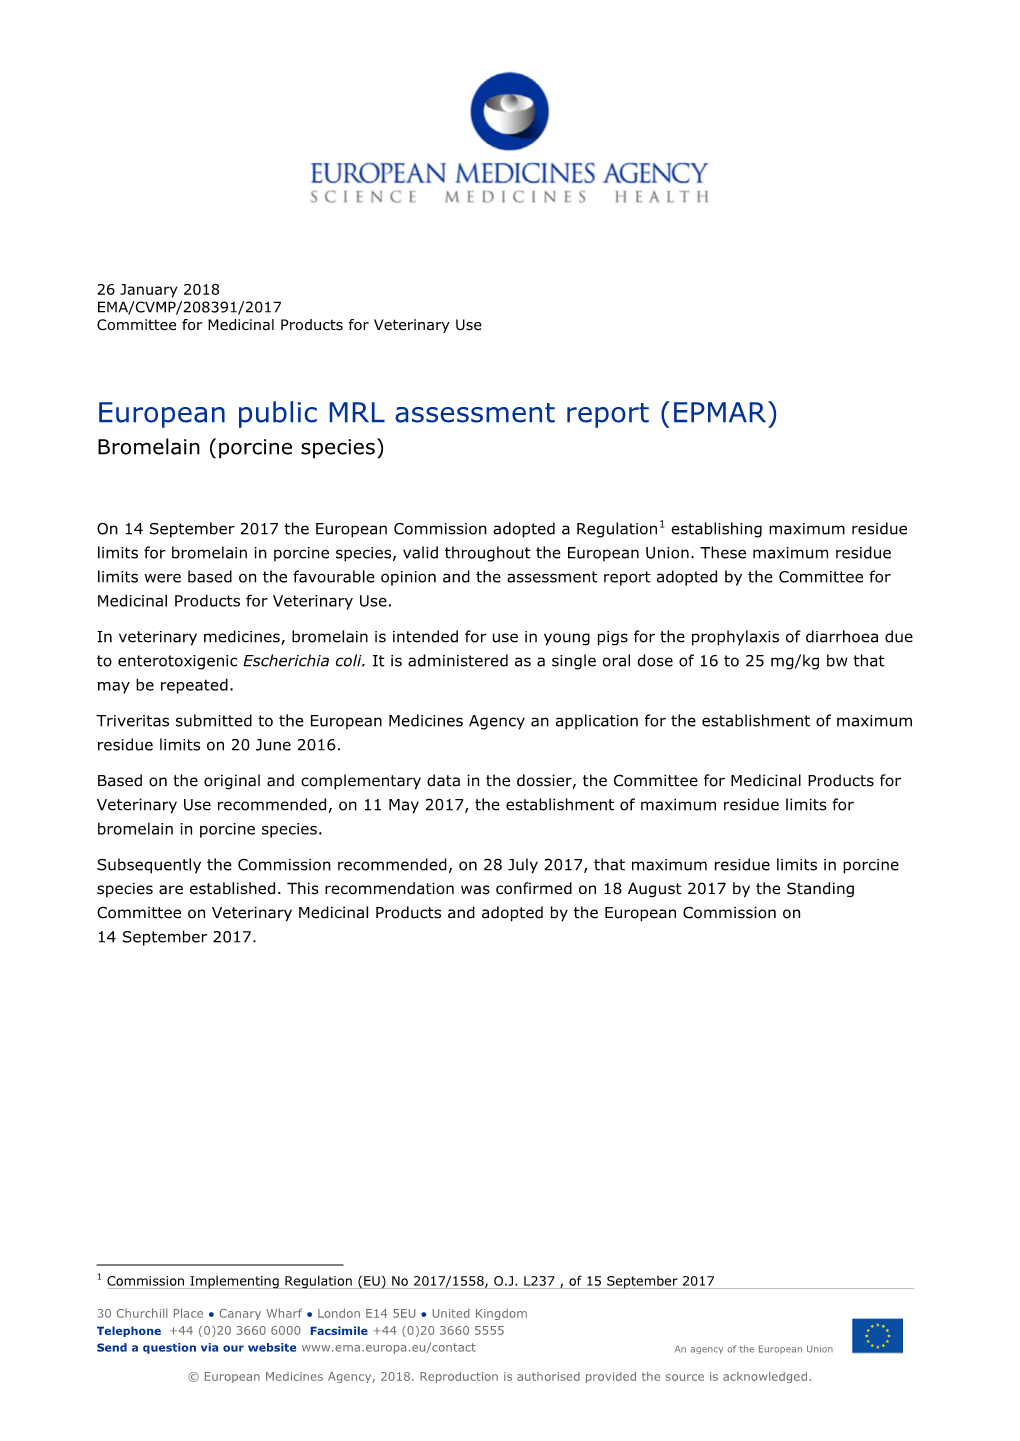 European Public MRL Assessment Report (EPMAR) Bromelain (Porcine Species)